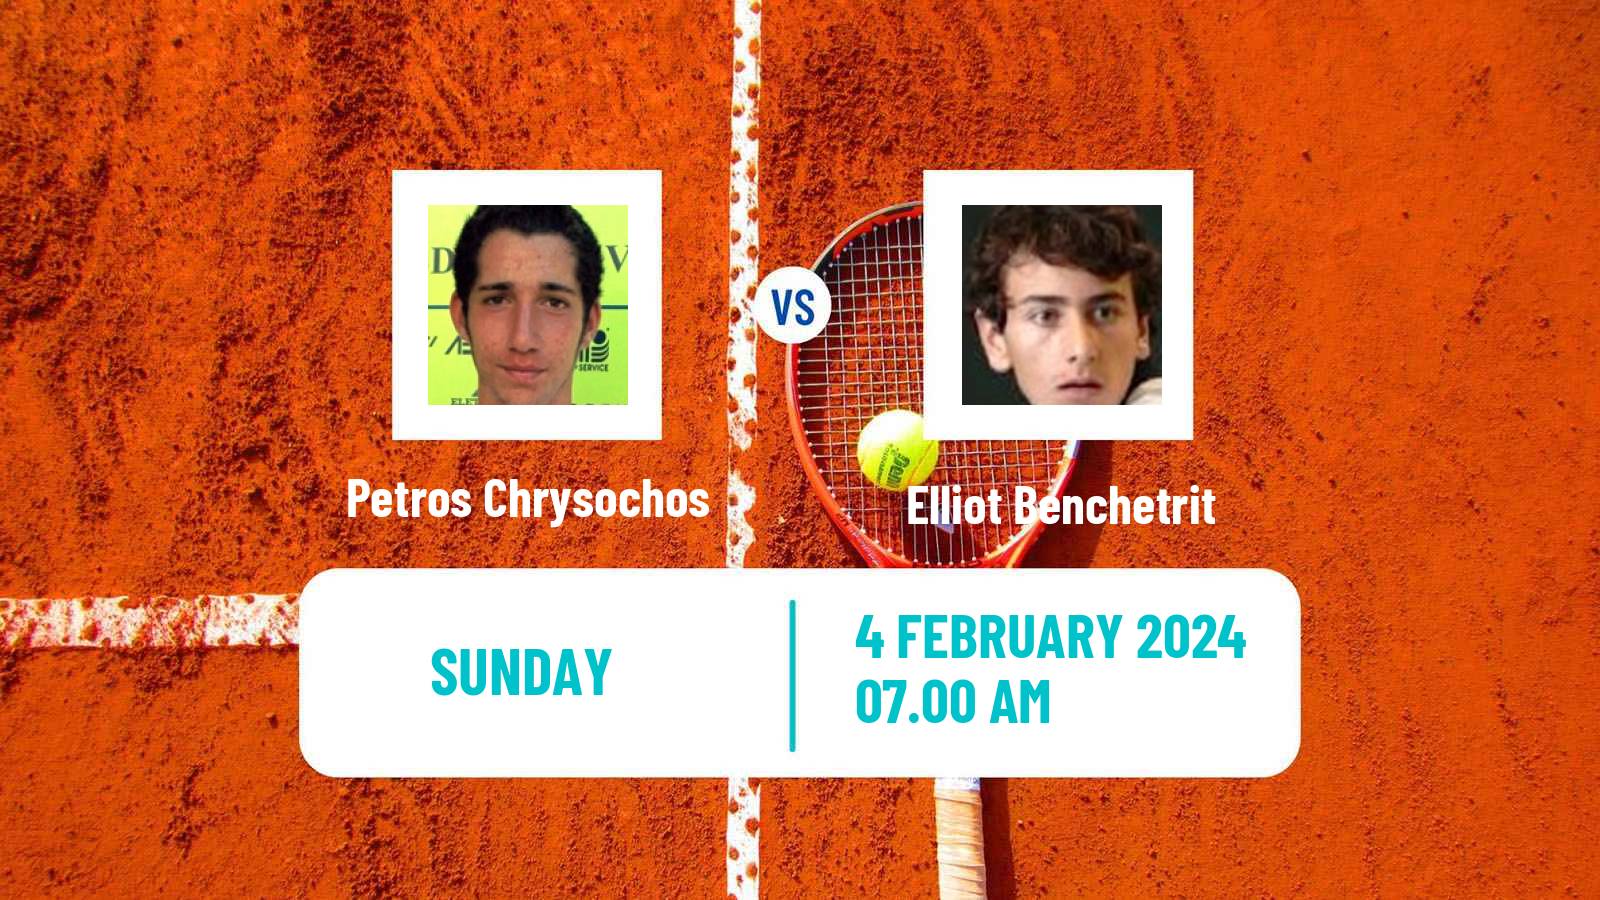 Tennis Davis Cup World Group II Petros Chrysochos - Elliot Benchetrit